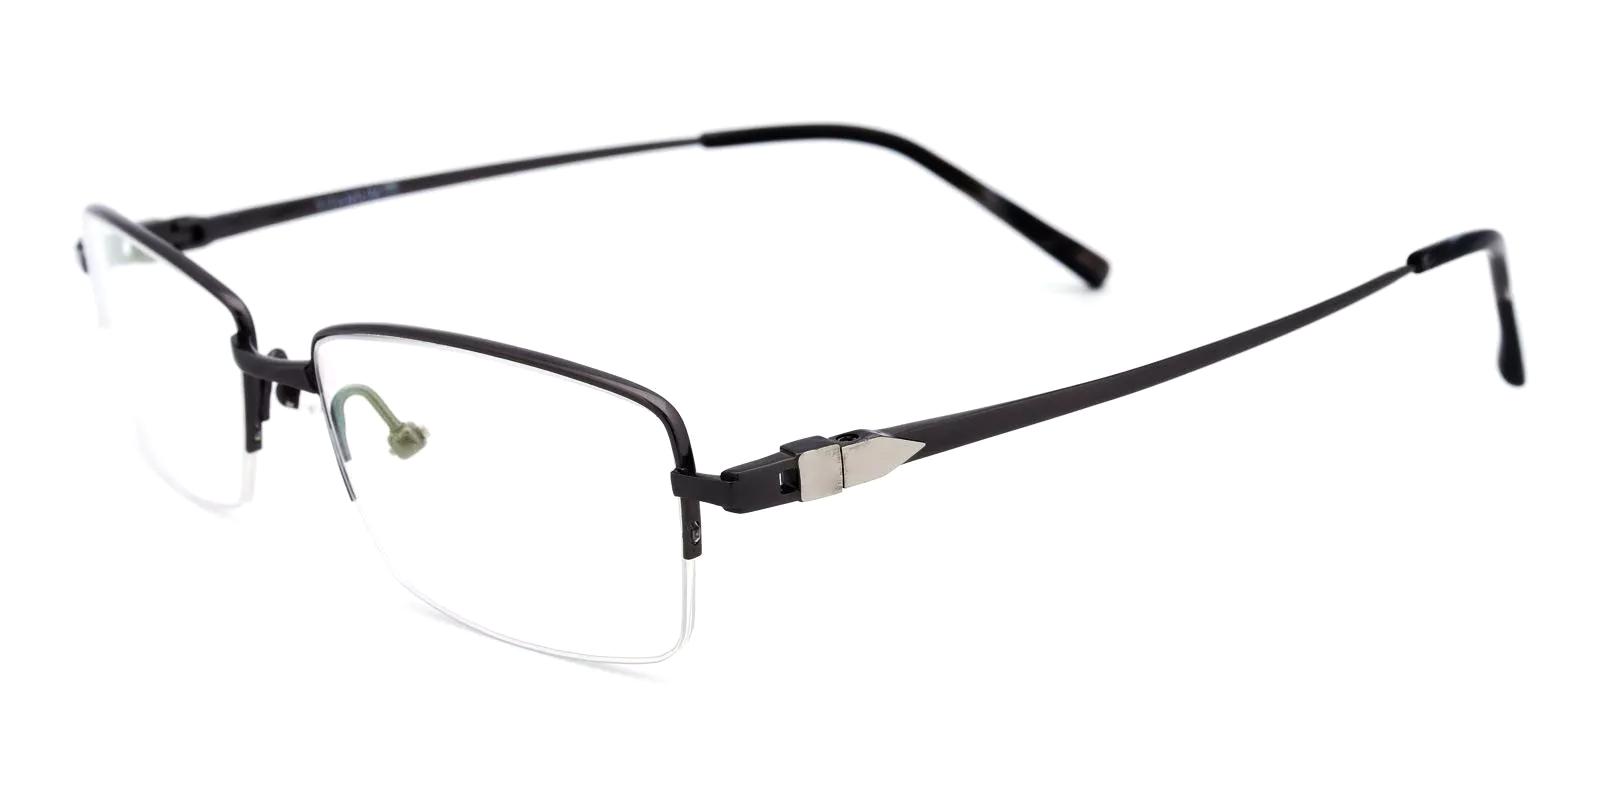 Torsior Black Titanium Eyeglasses , NosePads Frames from ABBE Glasses